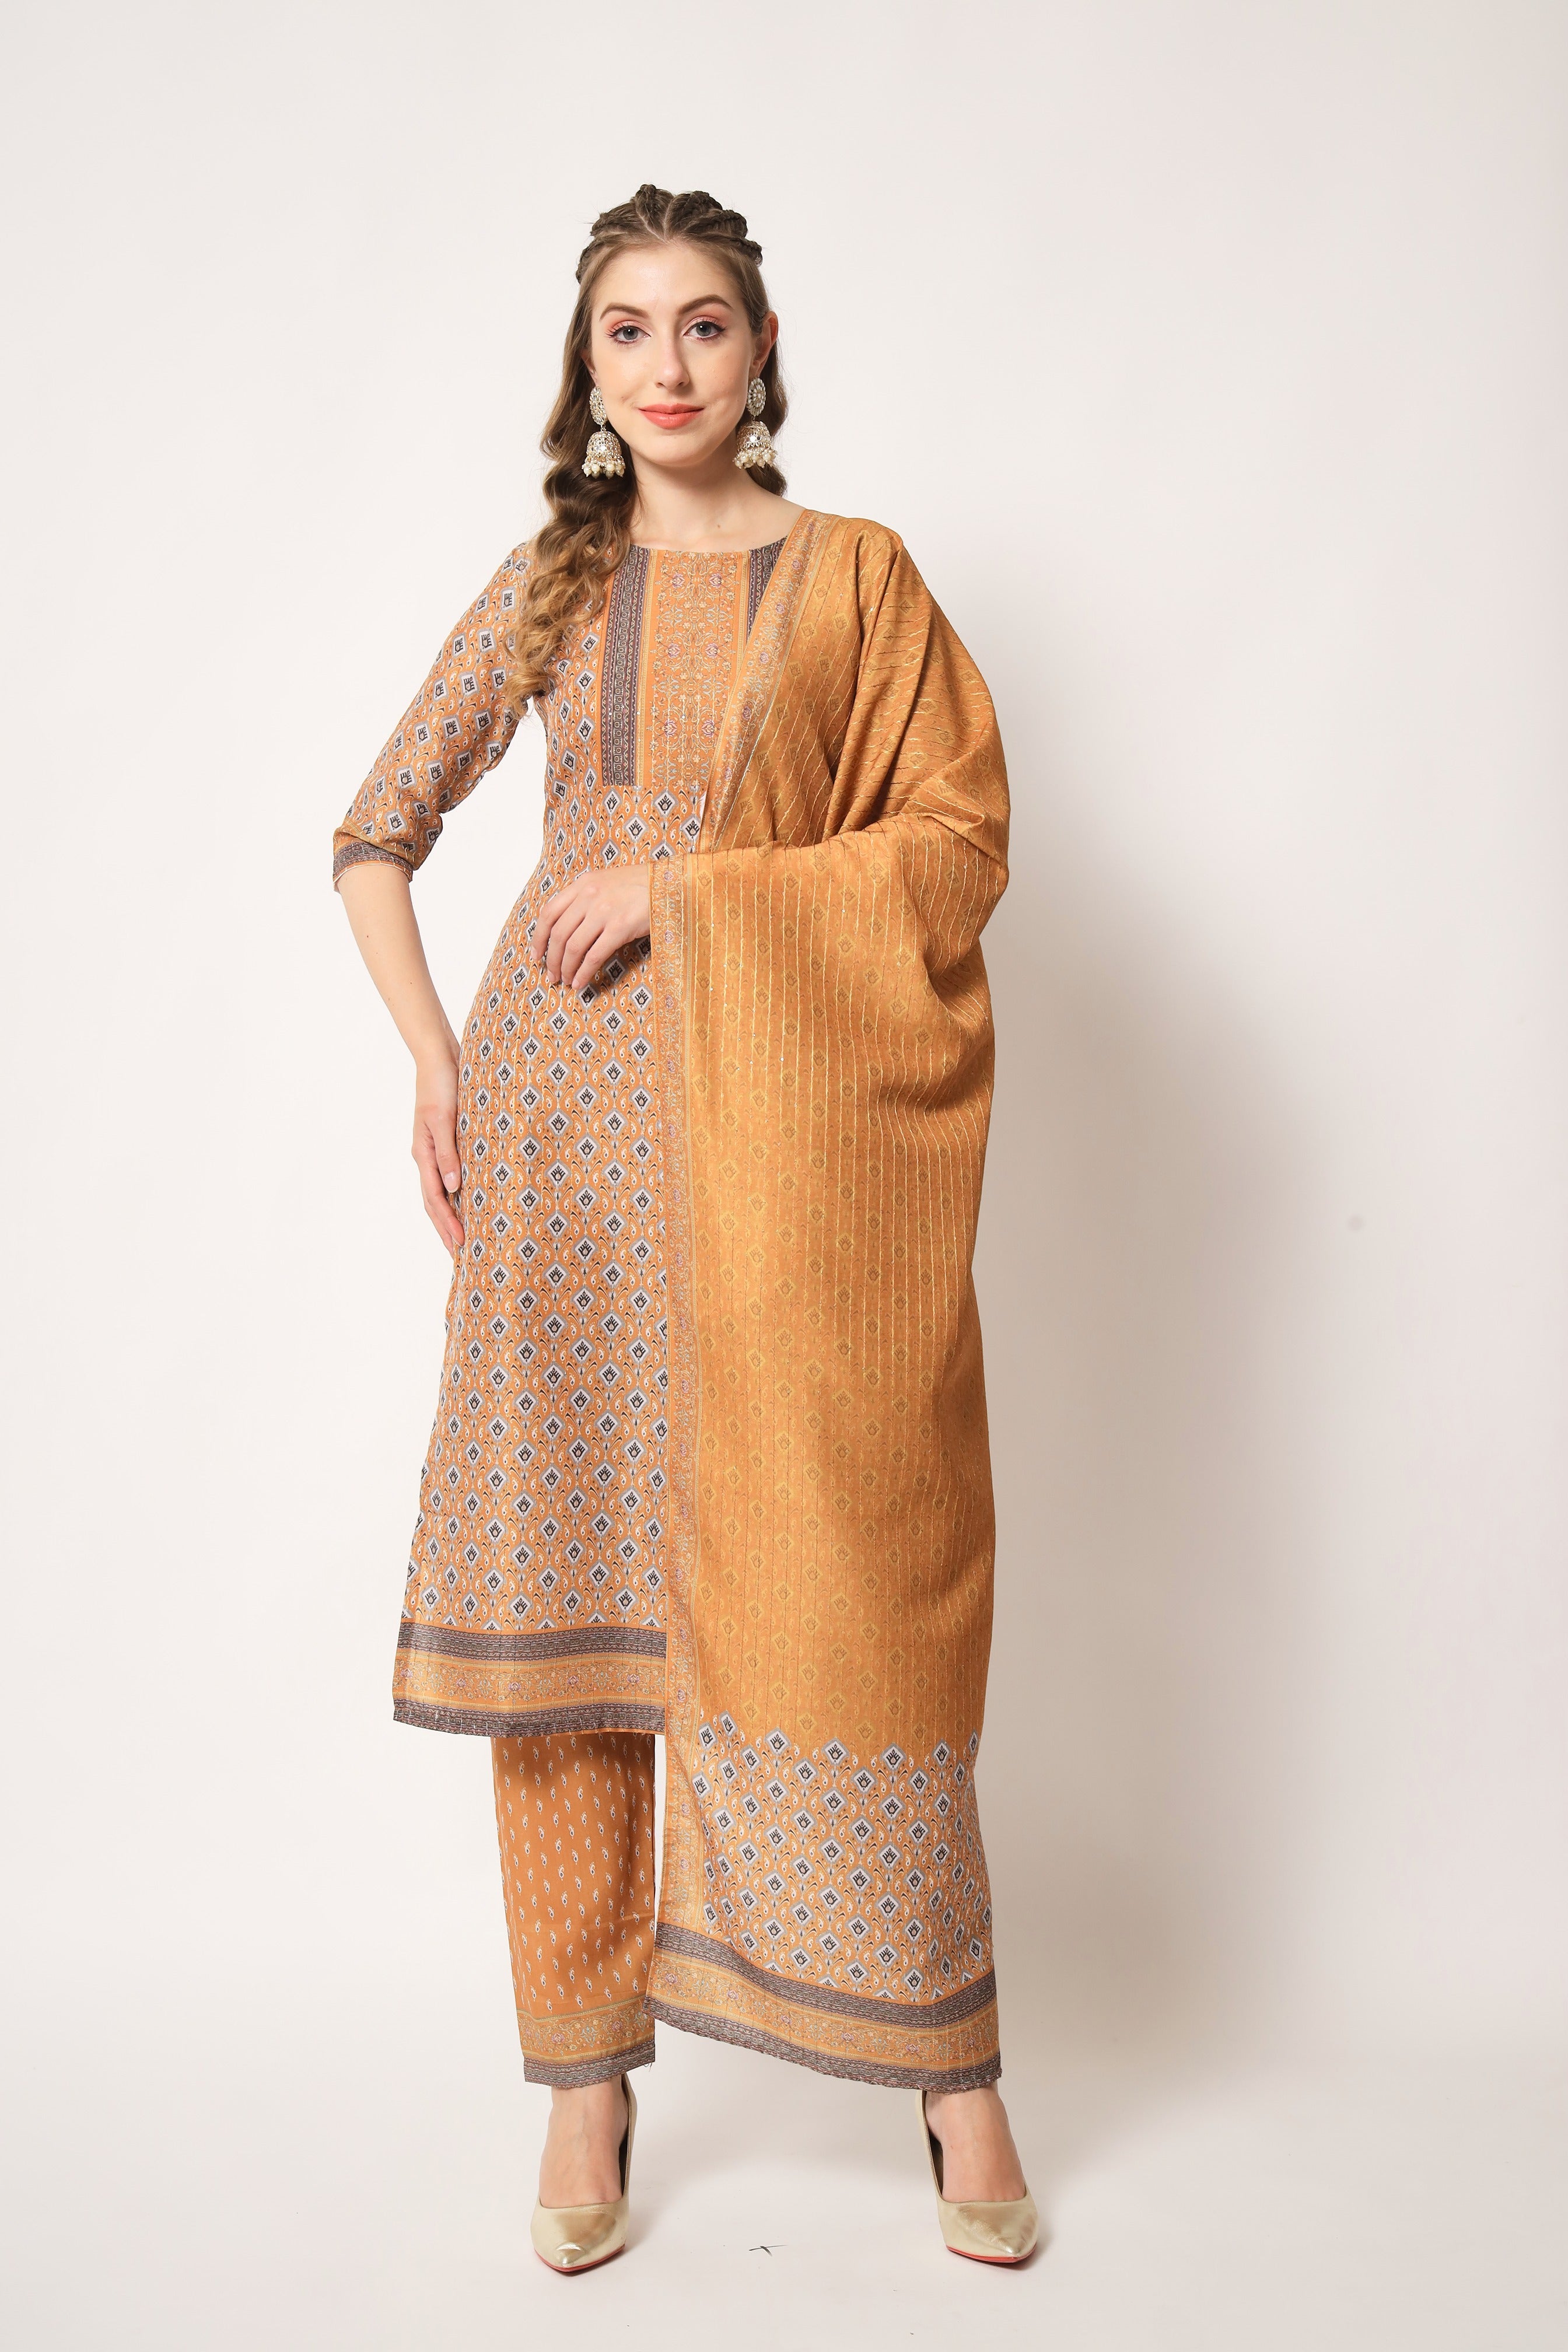 Embroidered Muslin Orange Trendy Salwar Kameez For Women